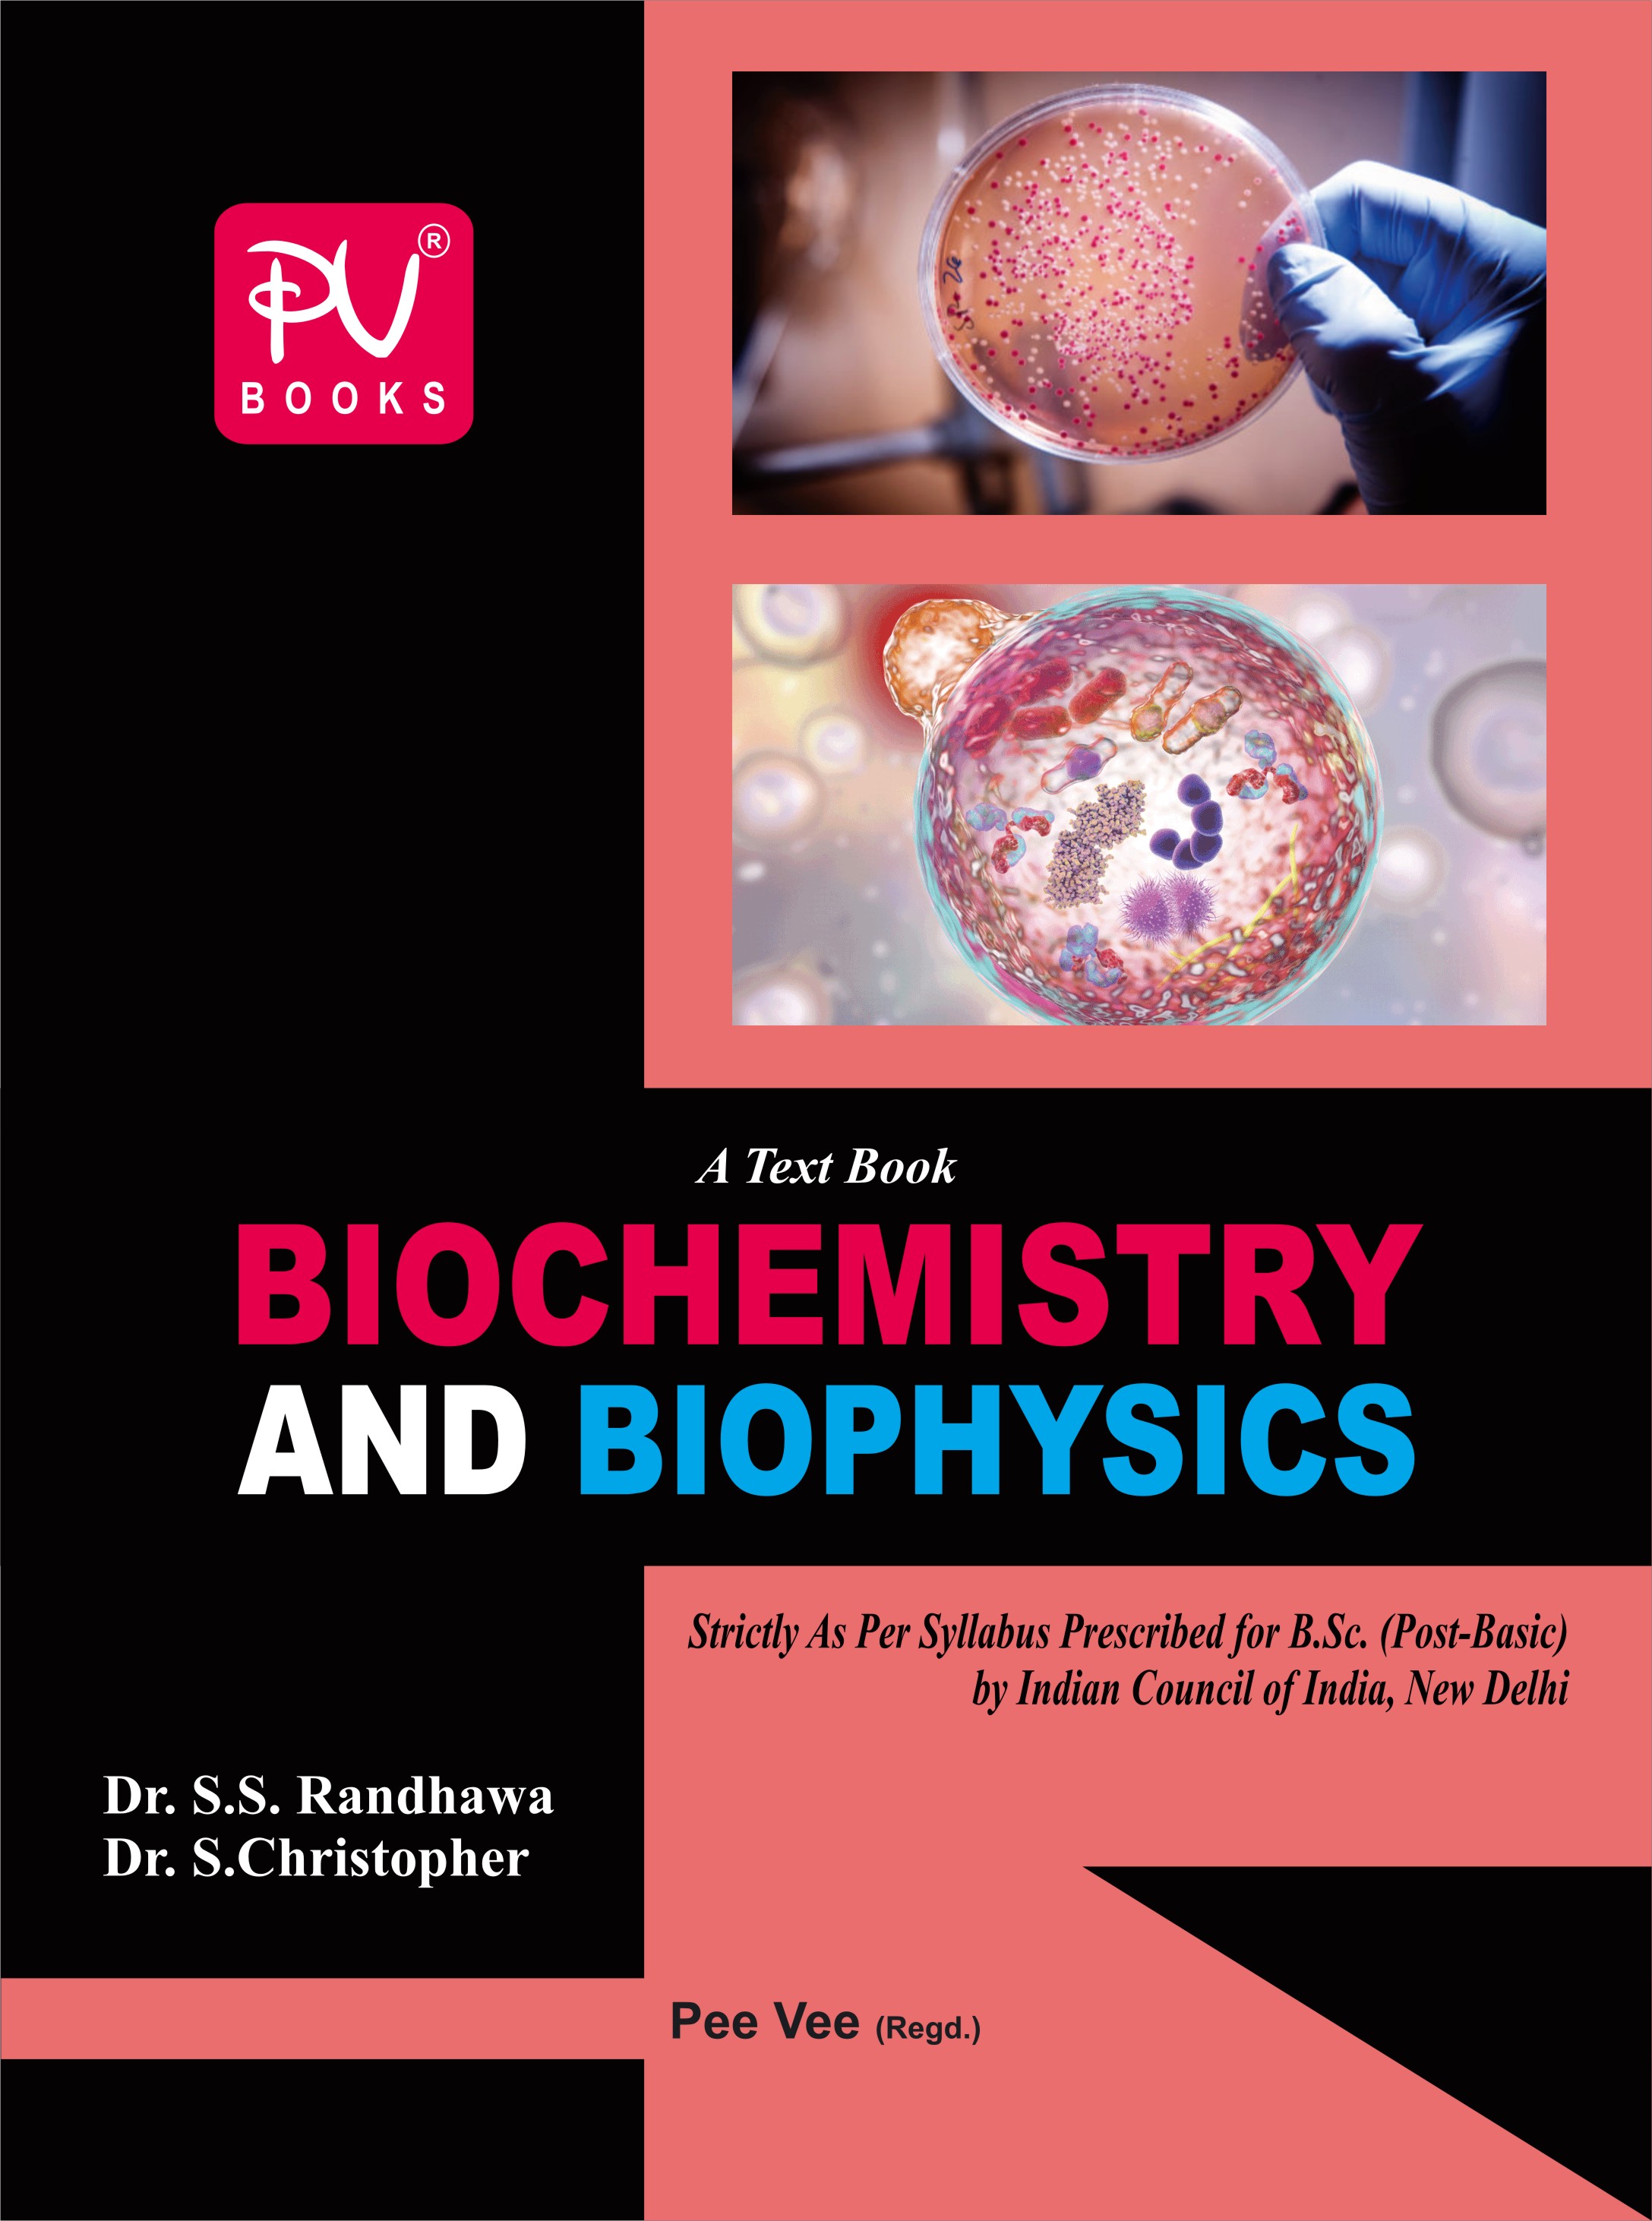 Биофизика журнал. Biochemistry book. Biophysics books. Amp Biochemistry. Книга "радиационная биофизика".